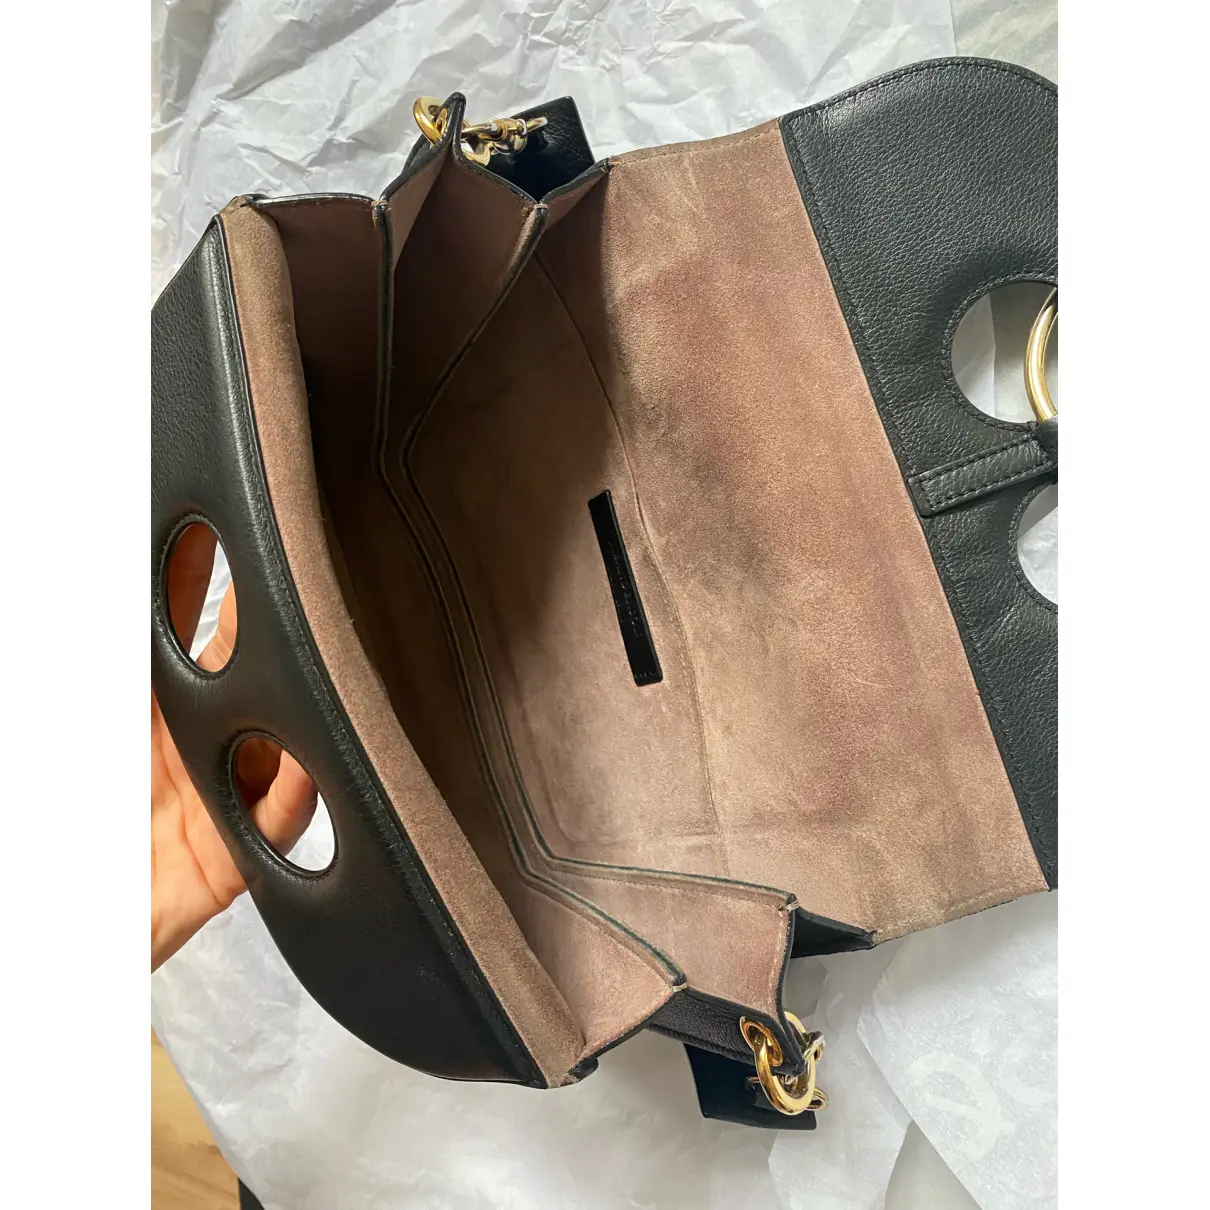 Pierce leather handbag JW Anderson